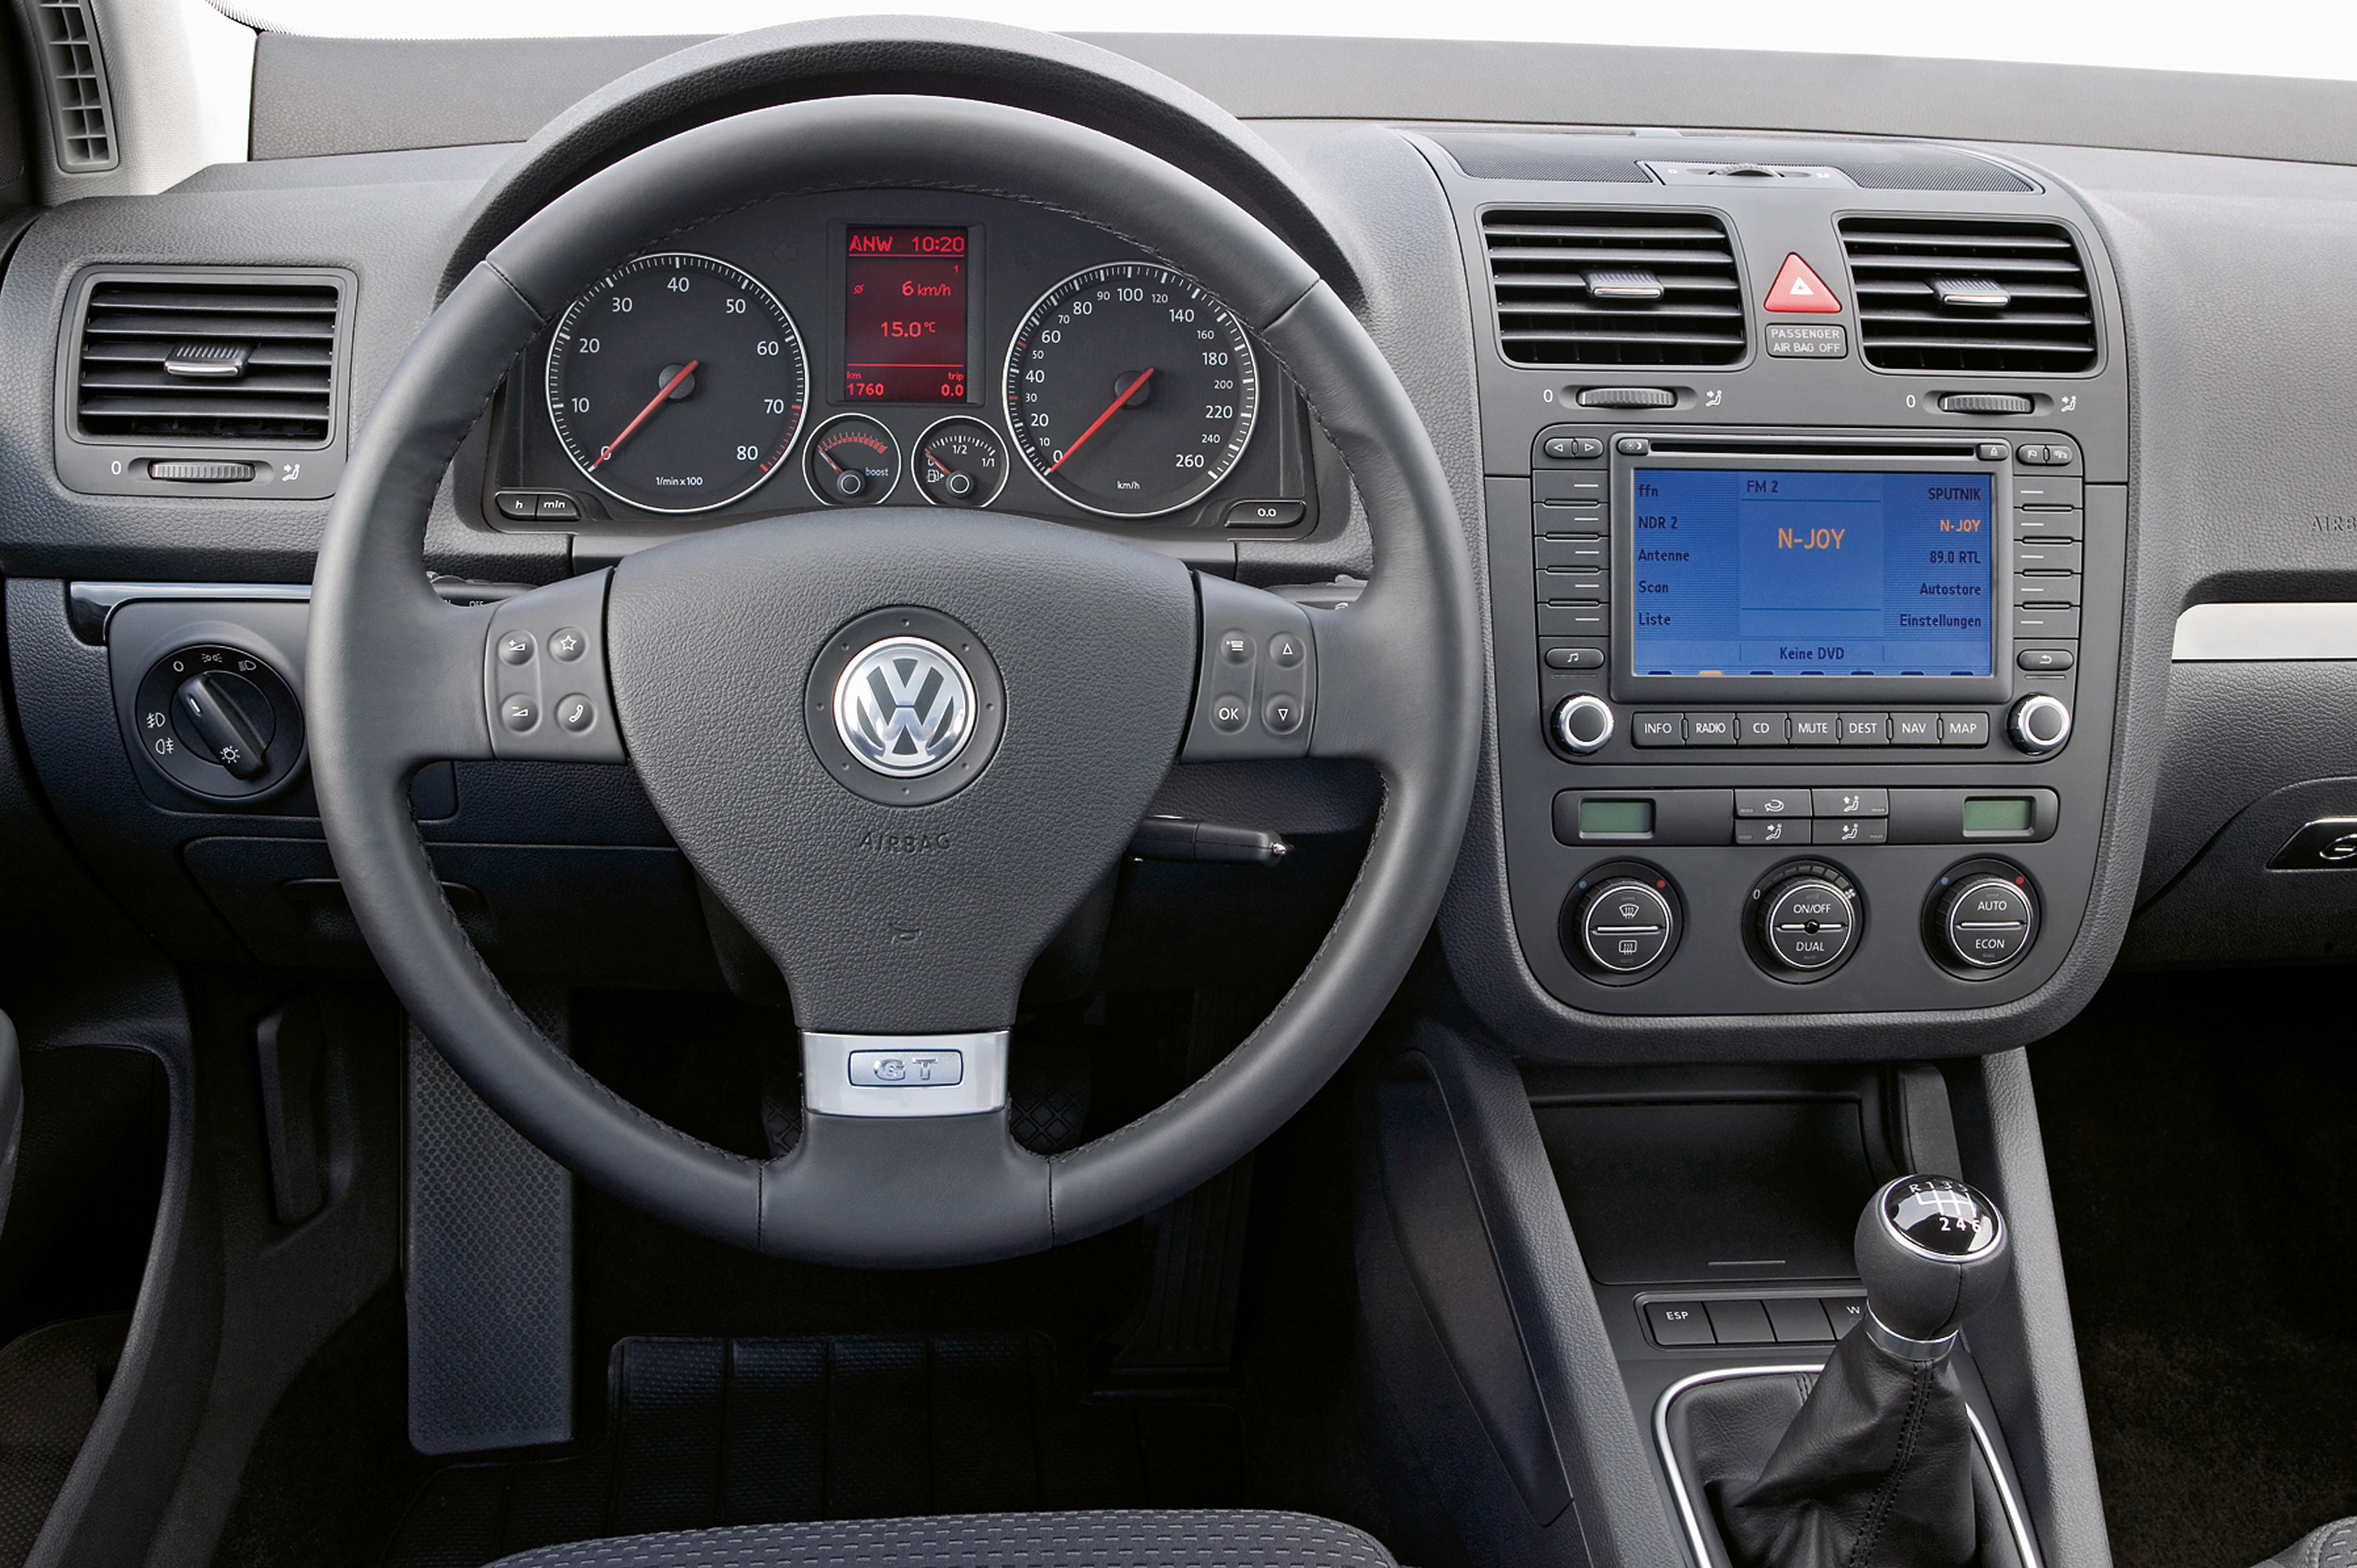 Volkswagen Golf 5 V (2005) Review Interior & Exterior Walkaround 